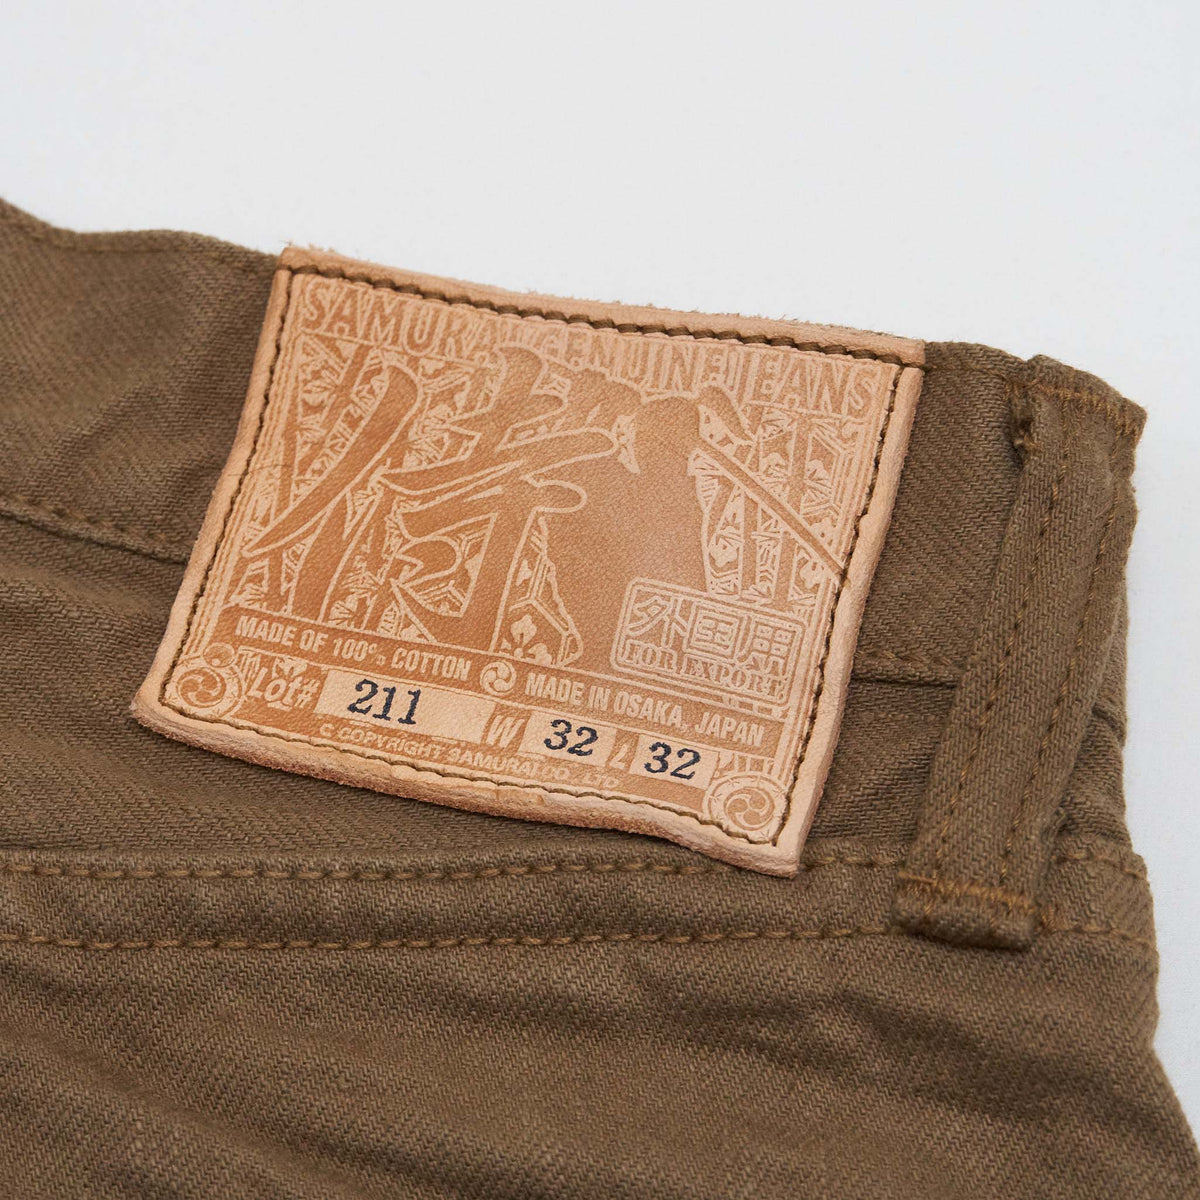 Samurai Jeans Sulfide Dyed Heavy 5-Pocket Jeans